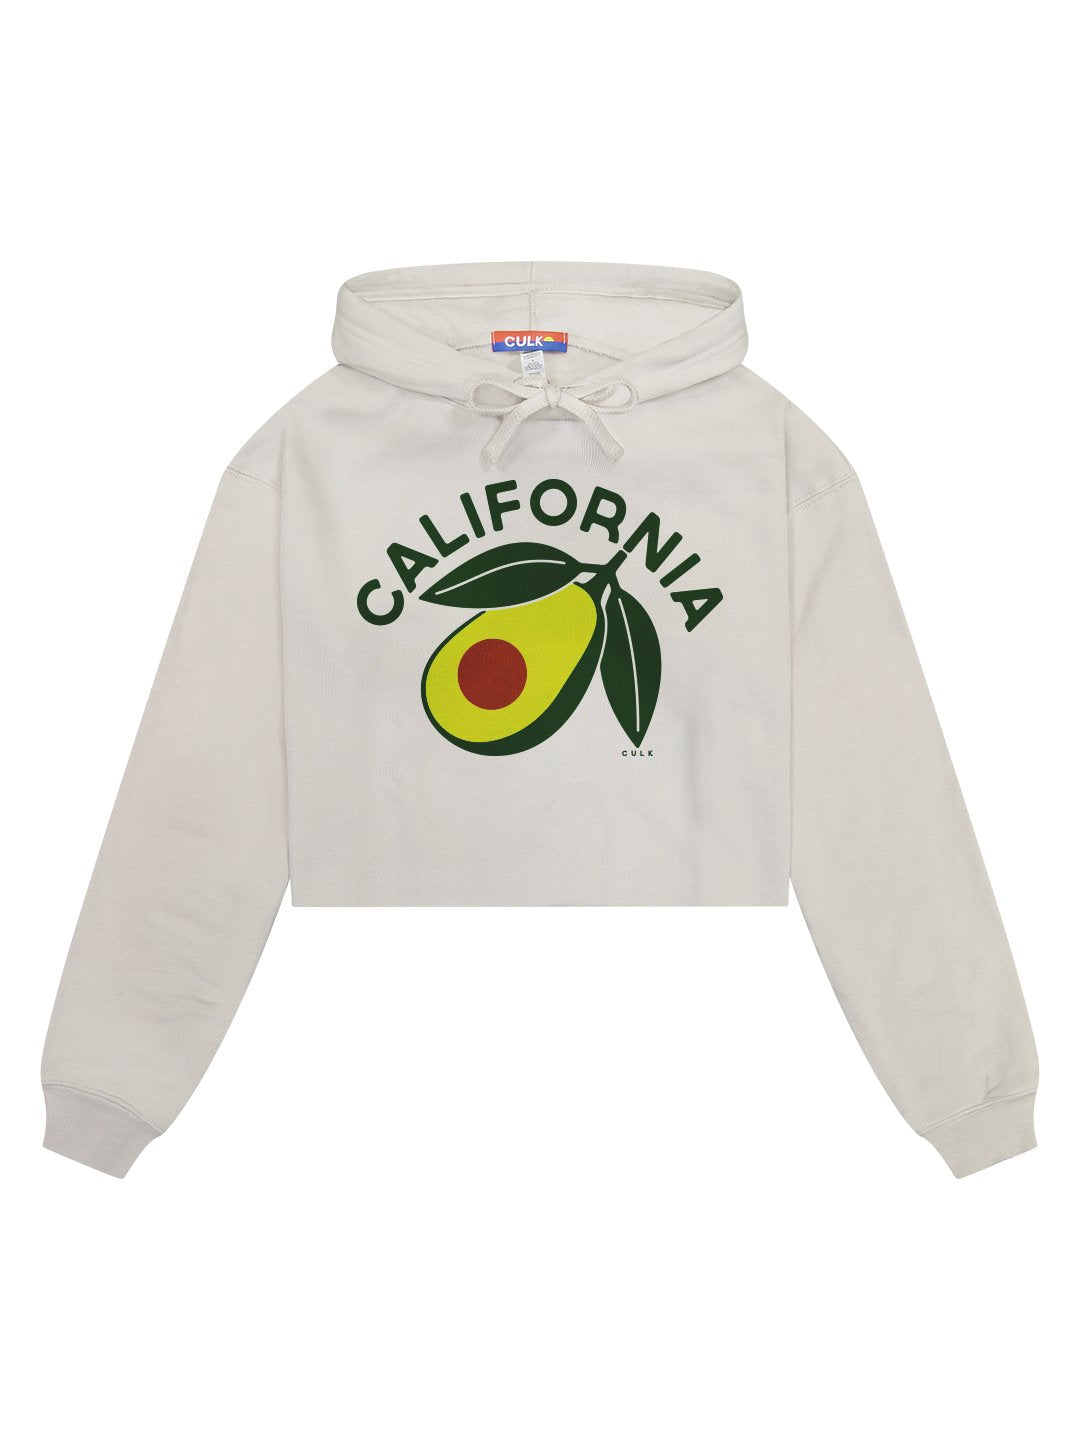 California Avocado Women's Cropped Hoodie Cream-Culk